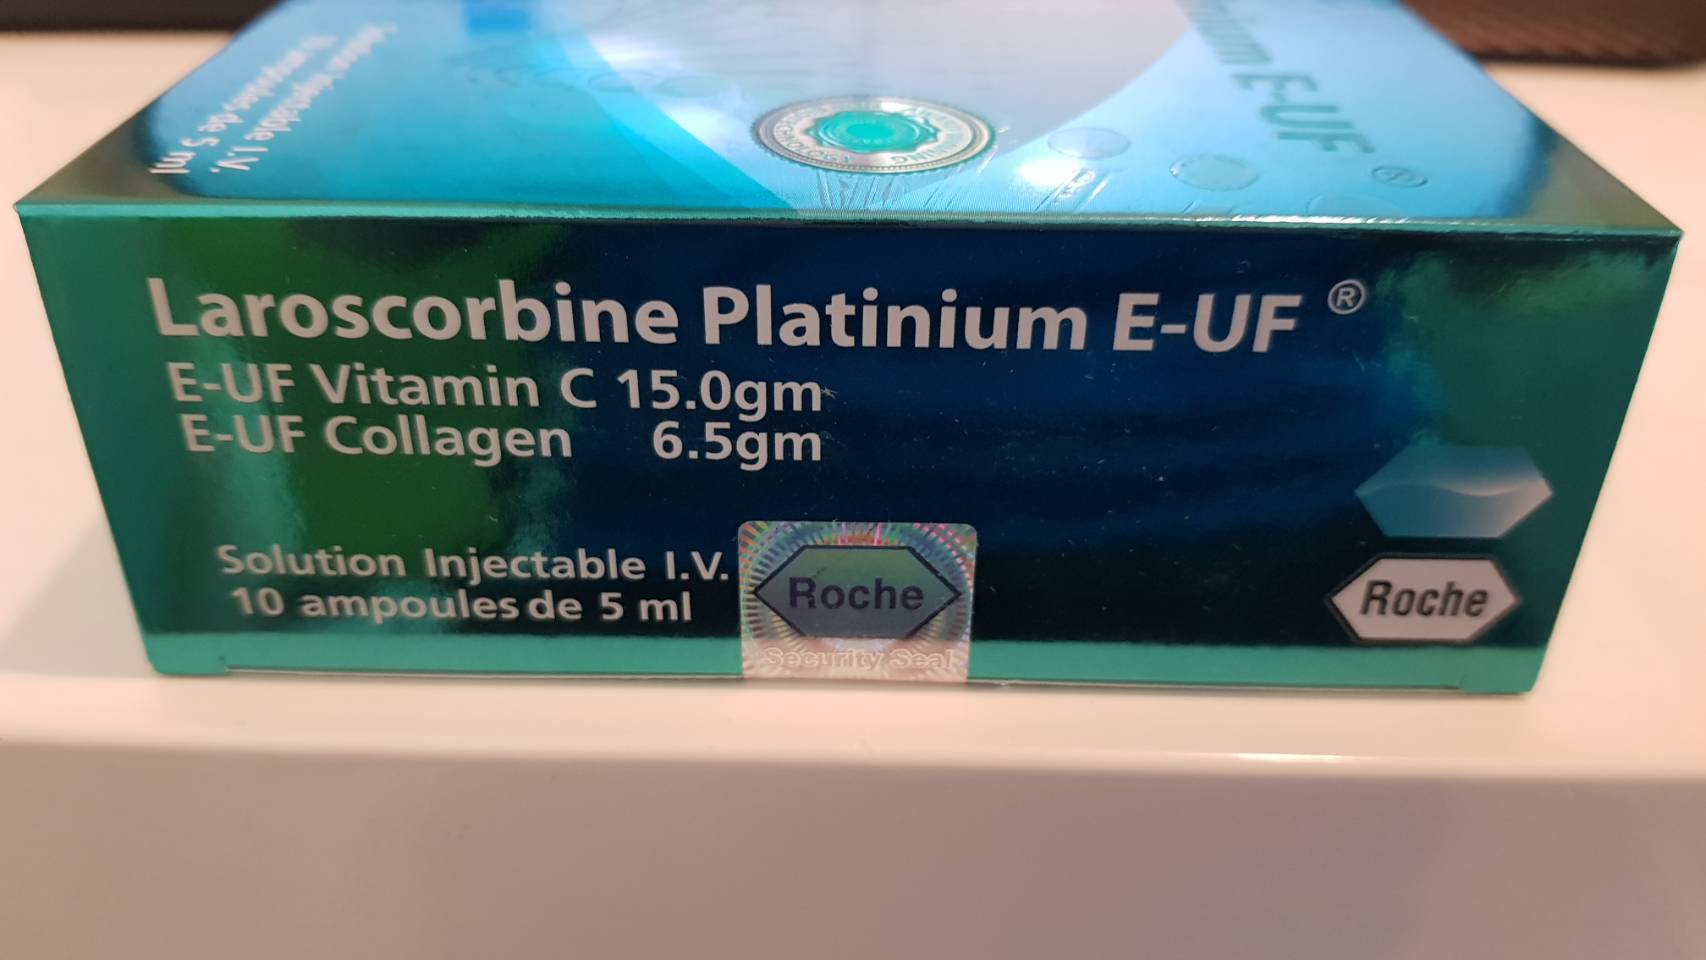 NEW ROCHE LAROSCORBINE PLATINIUM E-UF VITAMIN C 15.0 gm + COLLAGEN 6.5 gm INJECTION by "www.ccthaitown.com"